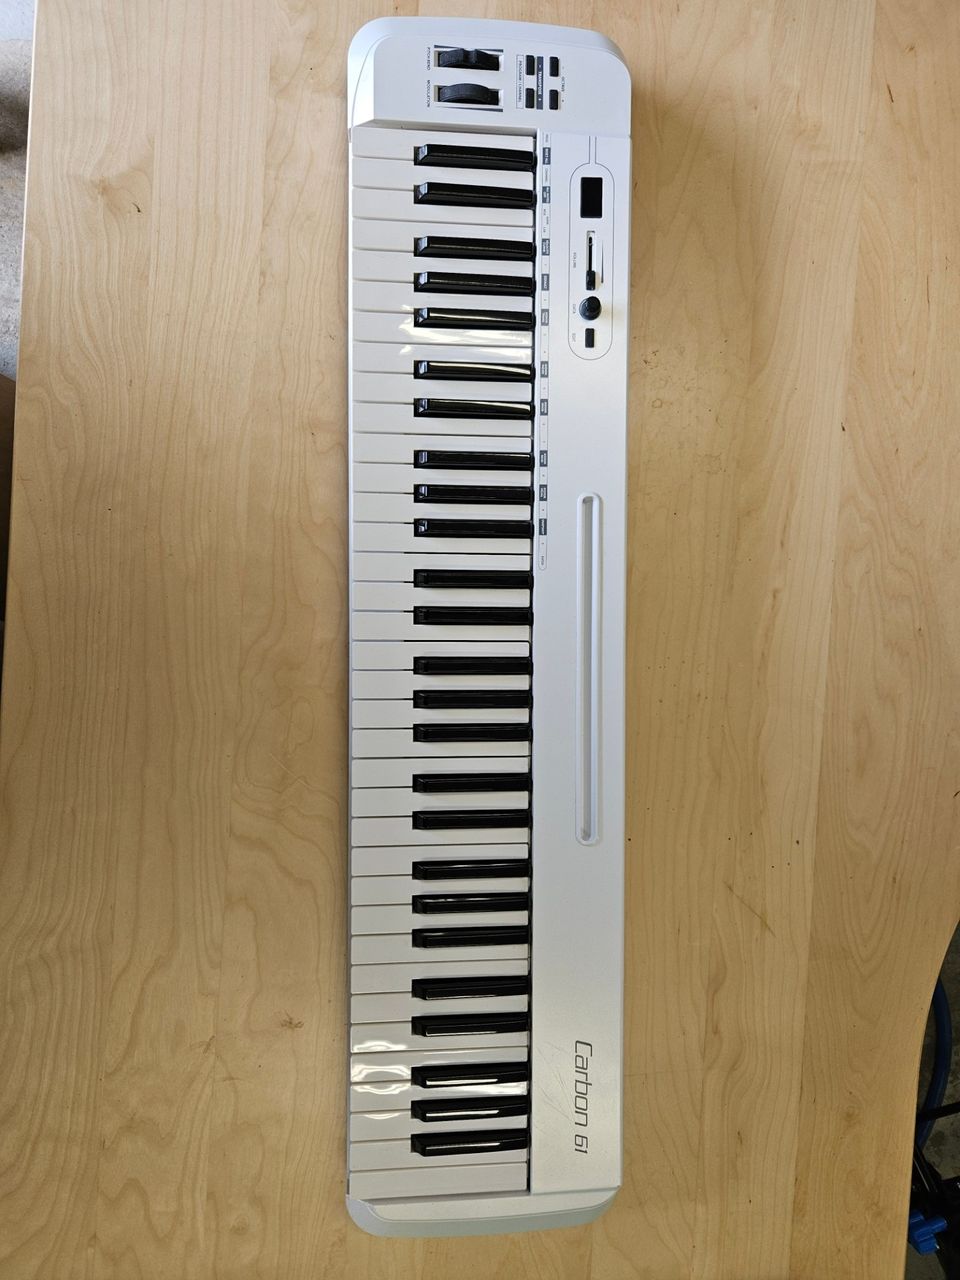 Samson Carbon 61 USB Midi Controller Keyboard